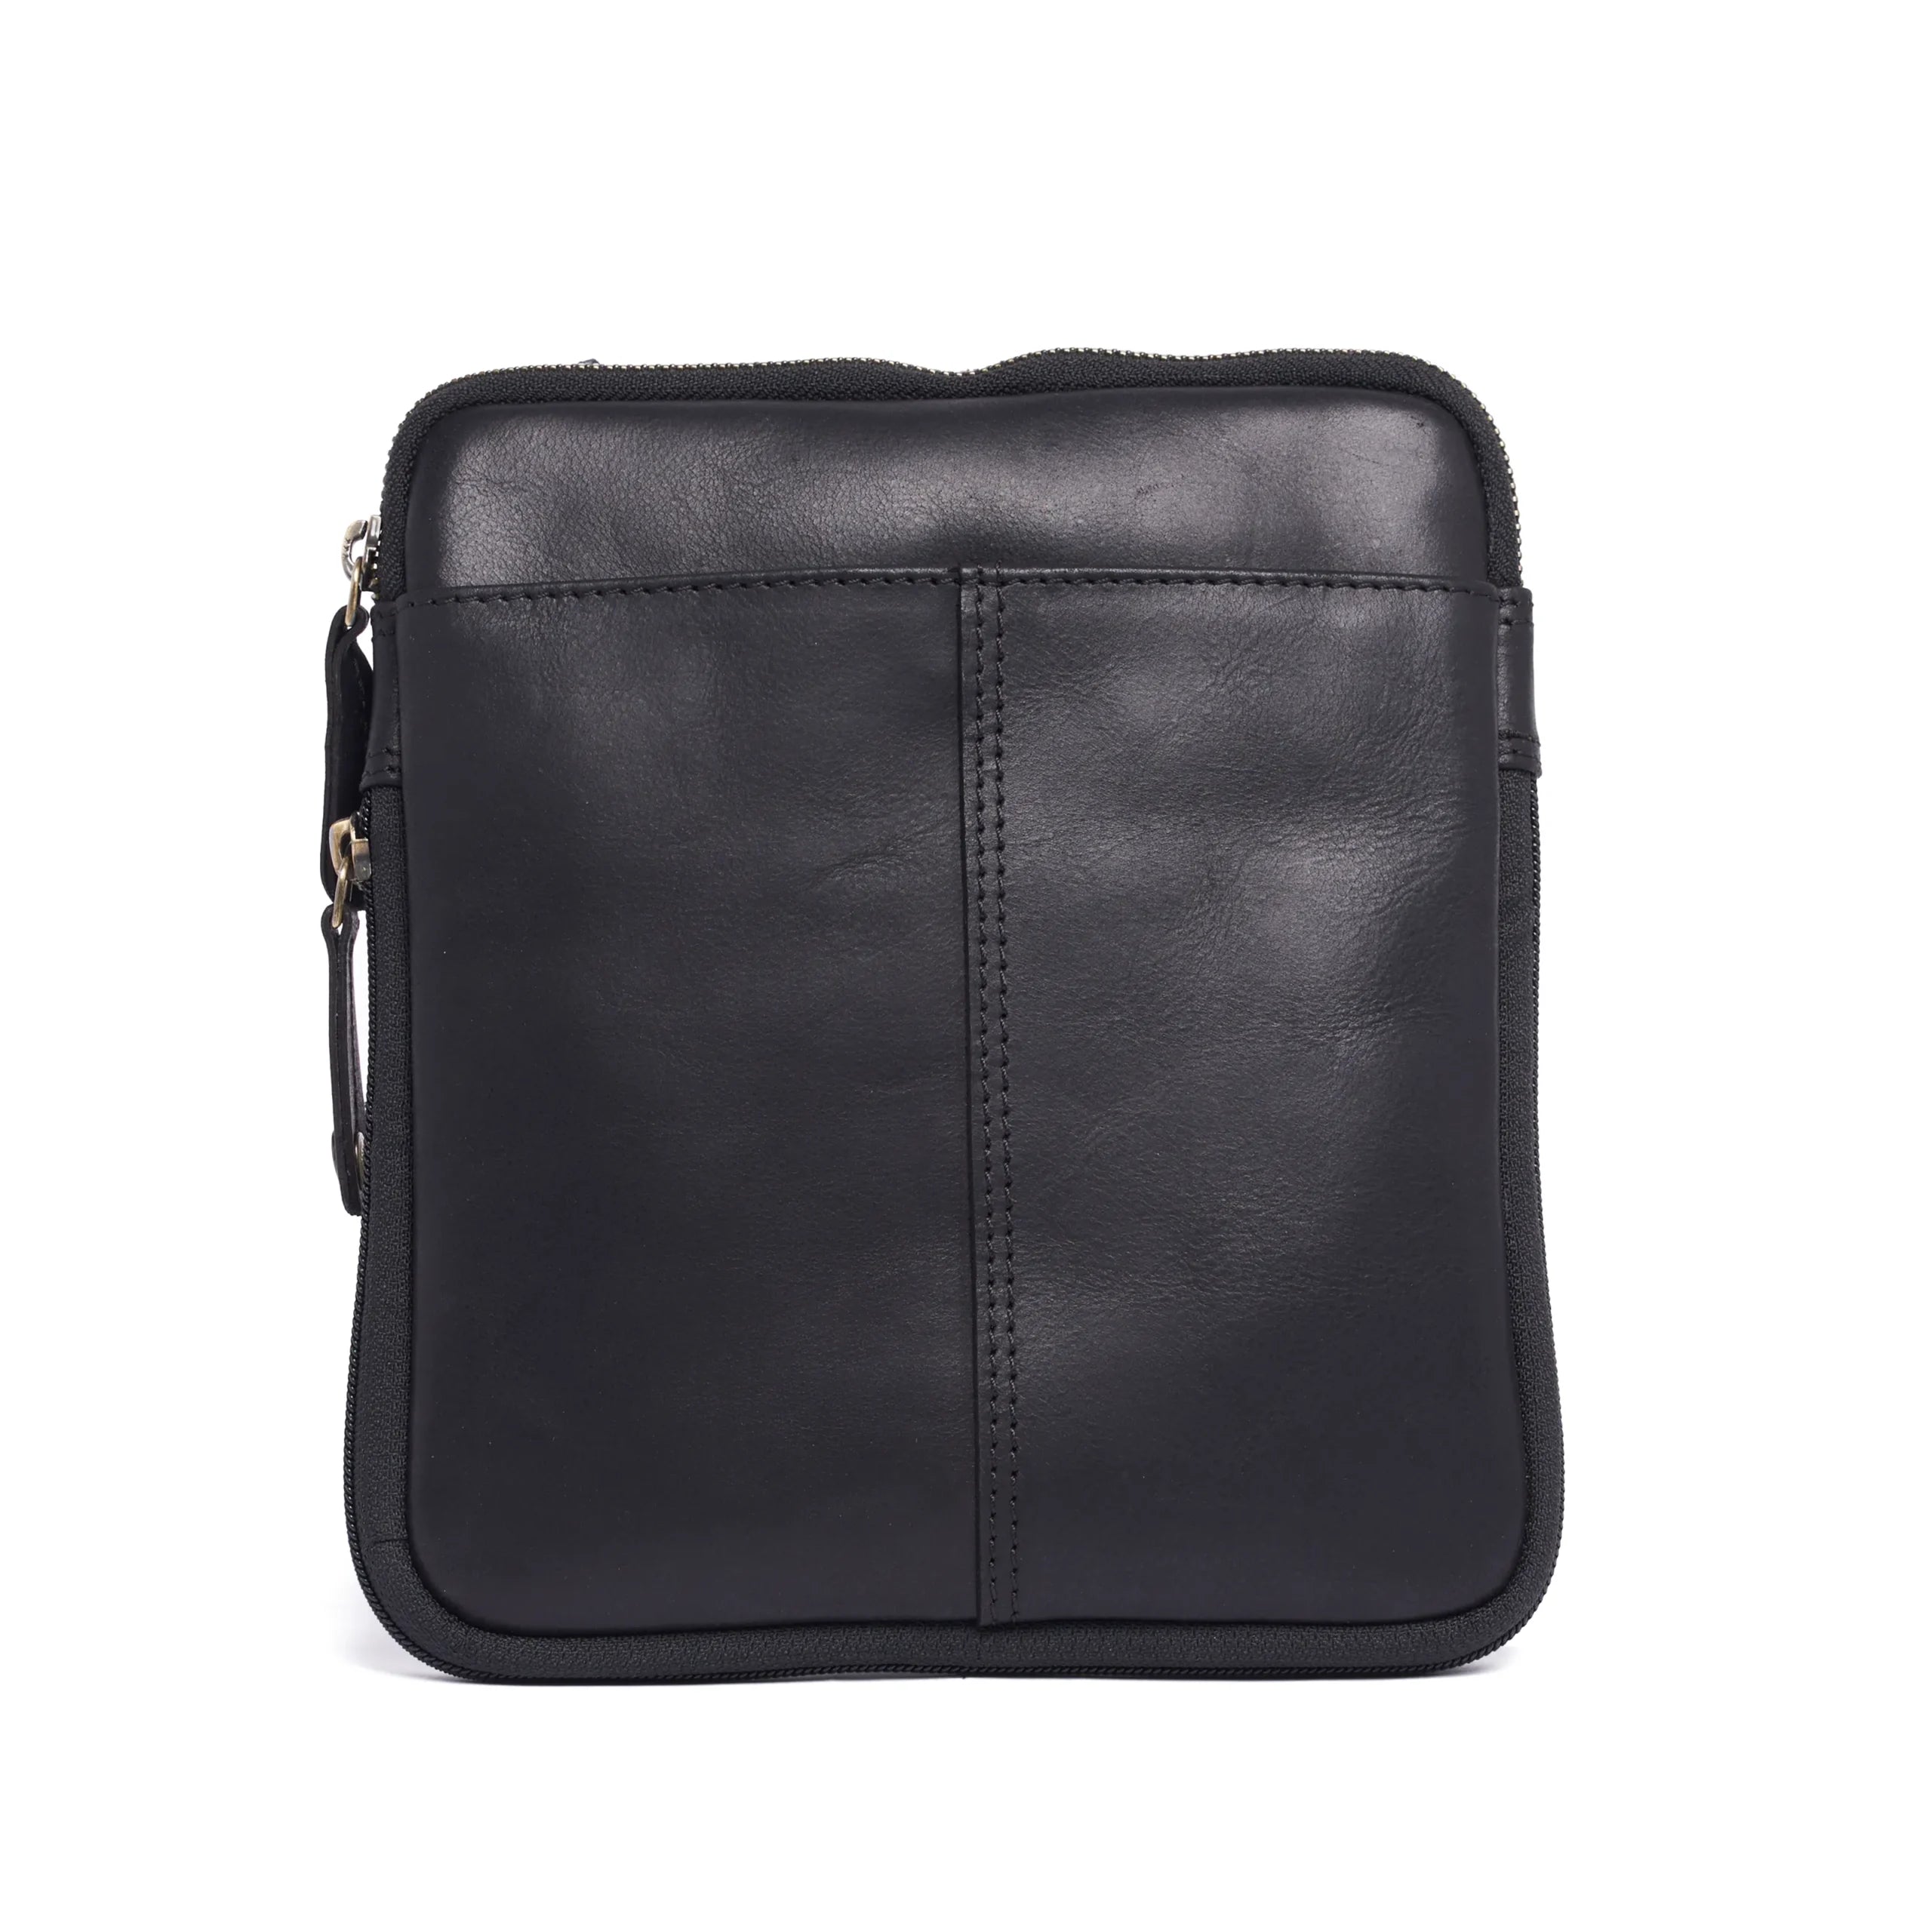 Oran - RH-2365 Cross body leather side bag - Black-1